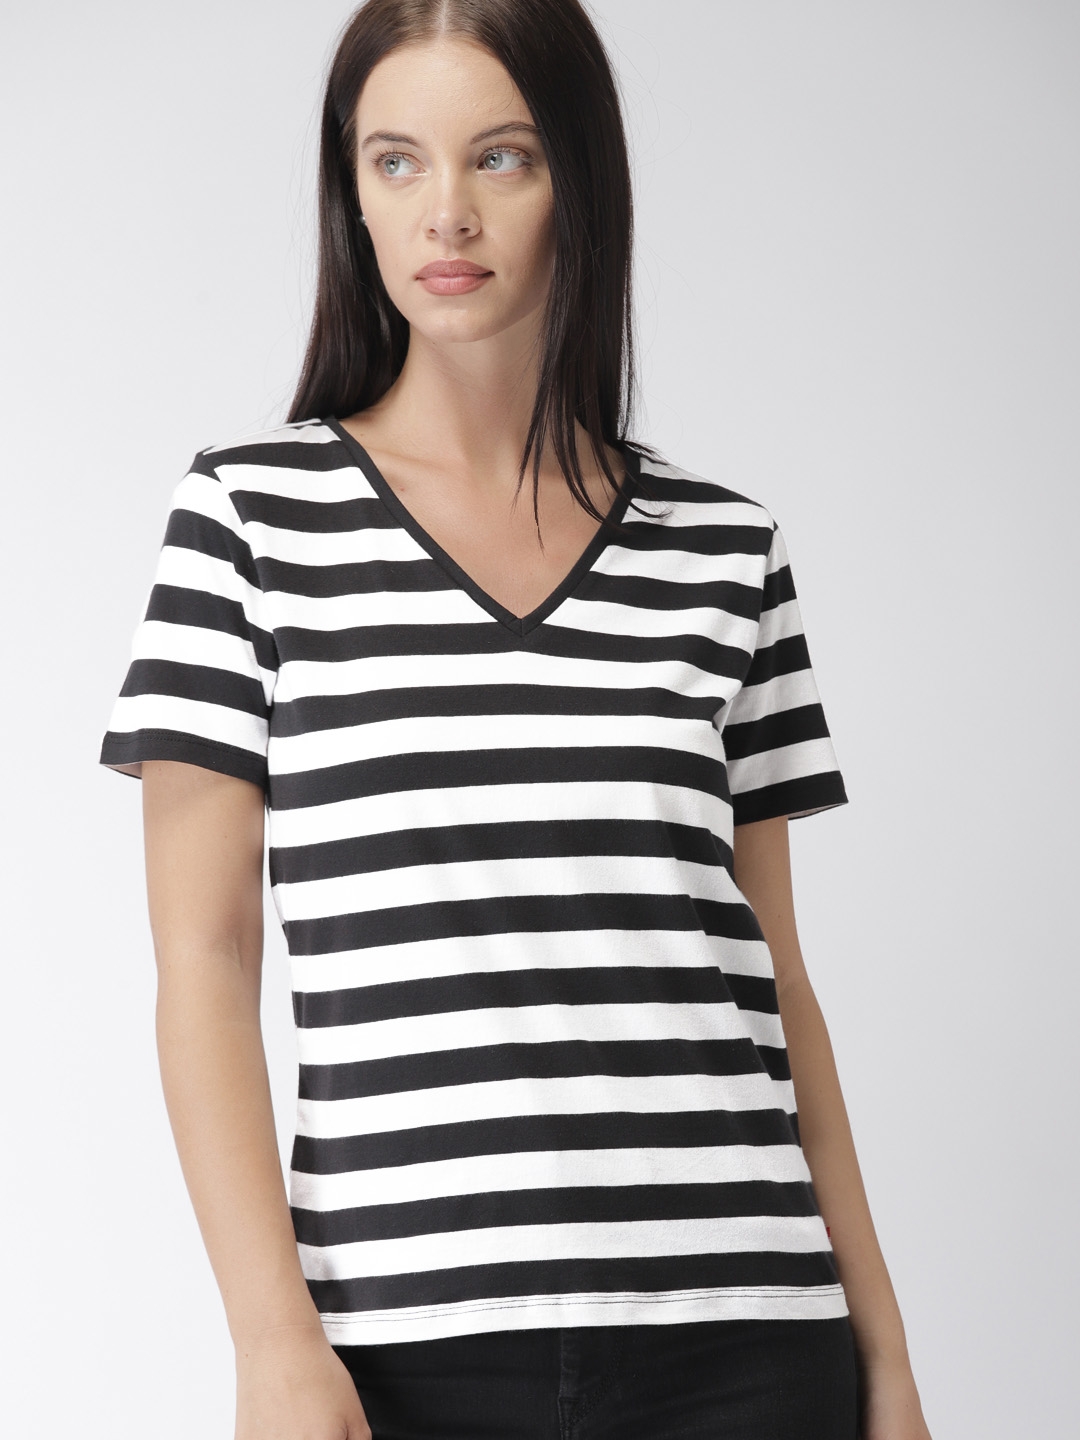 levi's striped shirt womens